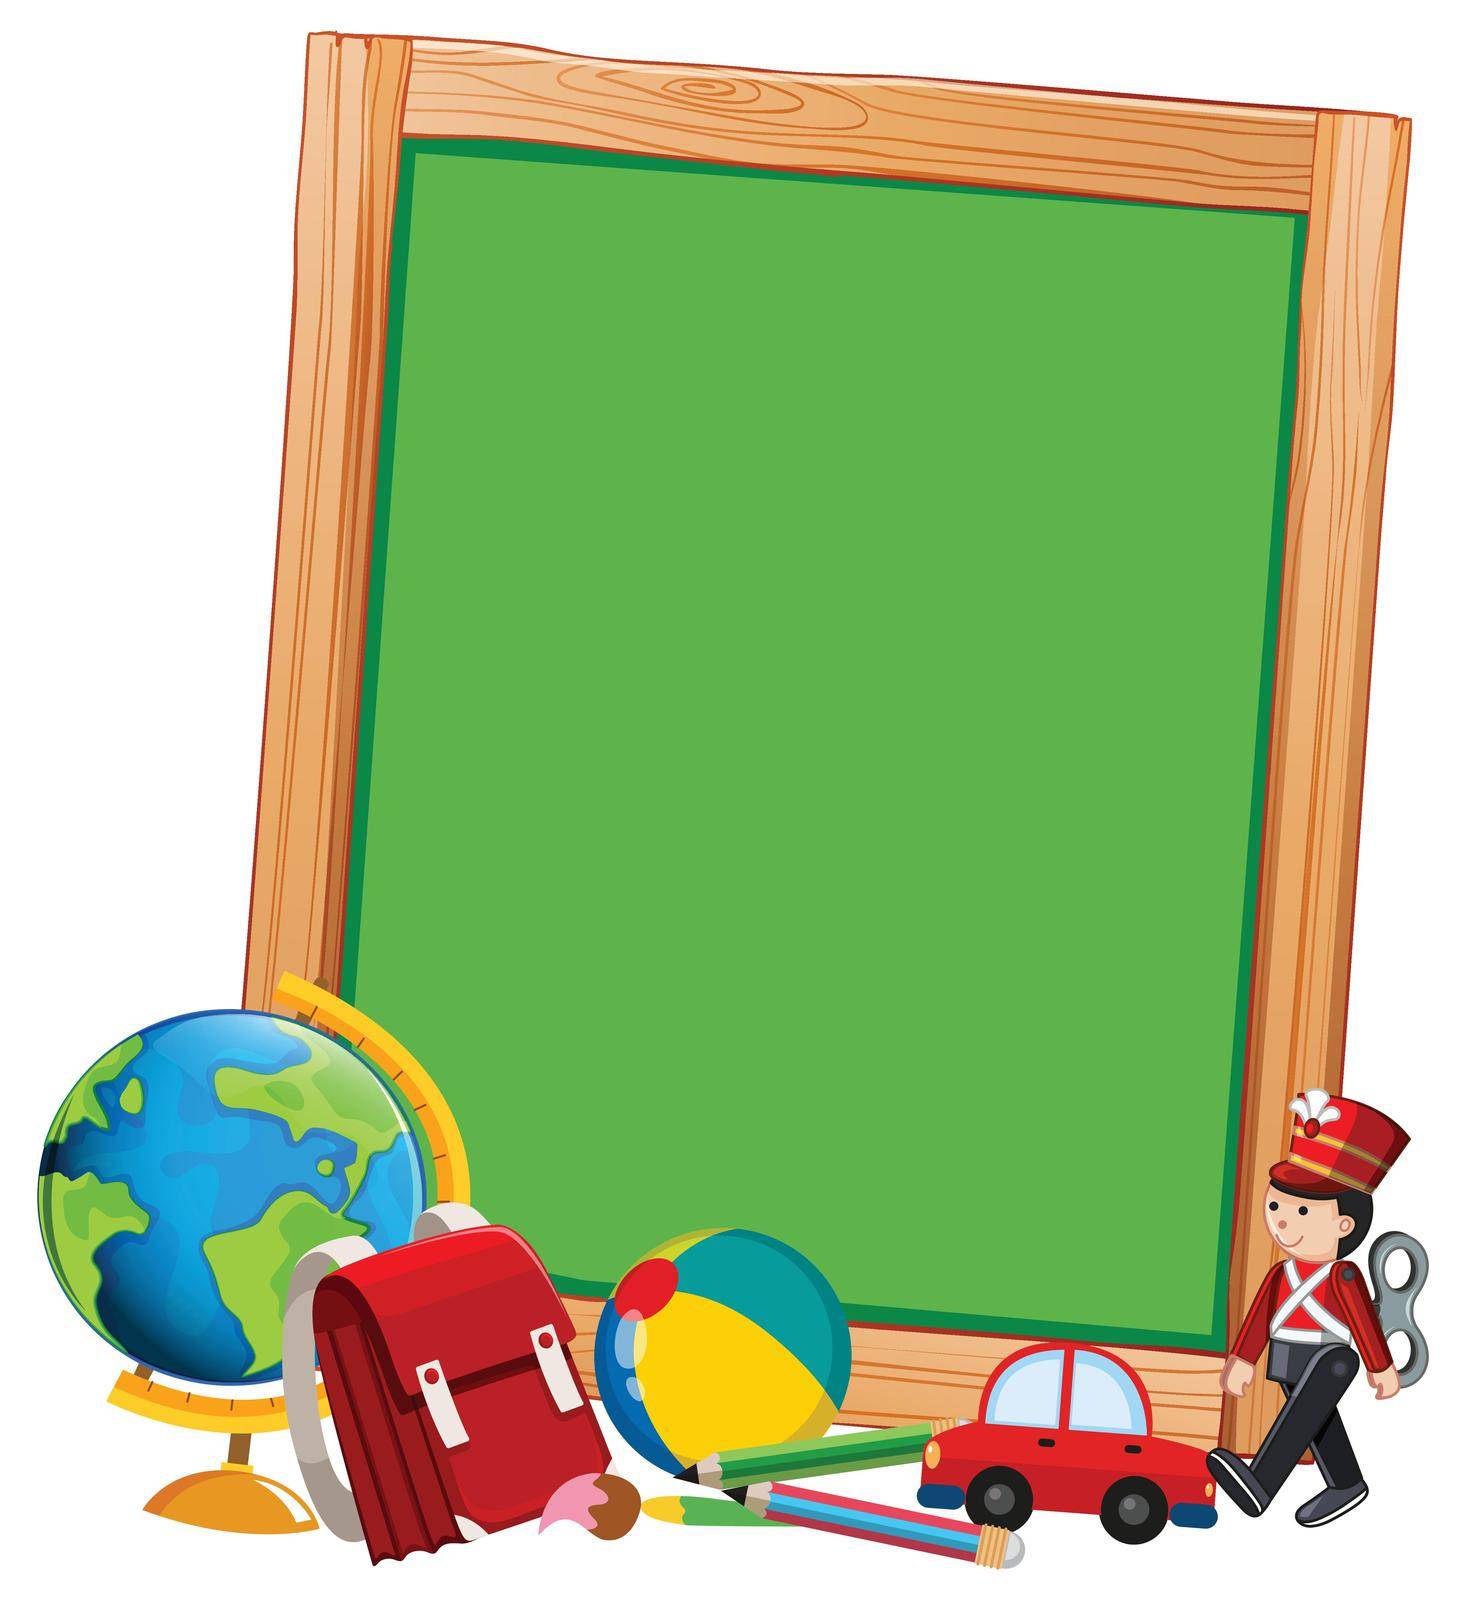 Blank blackboard with toys illustration